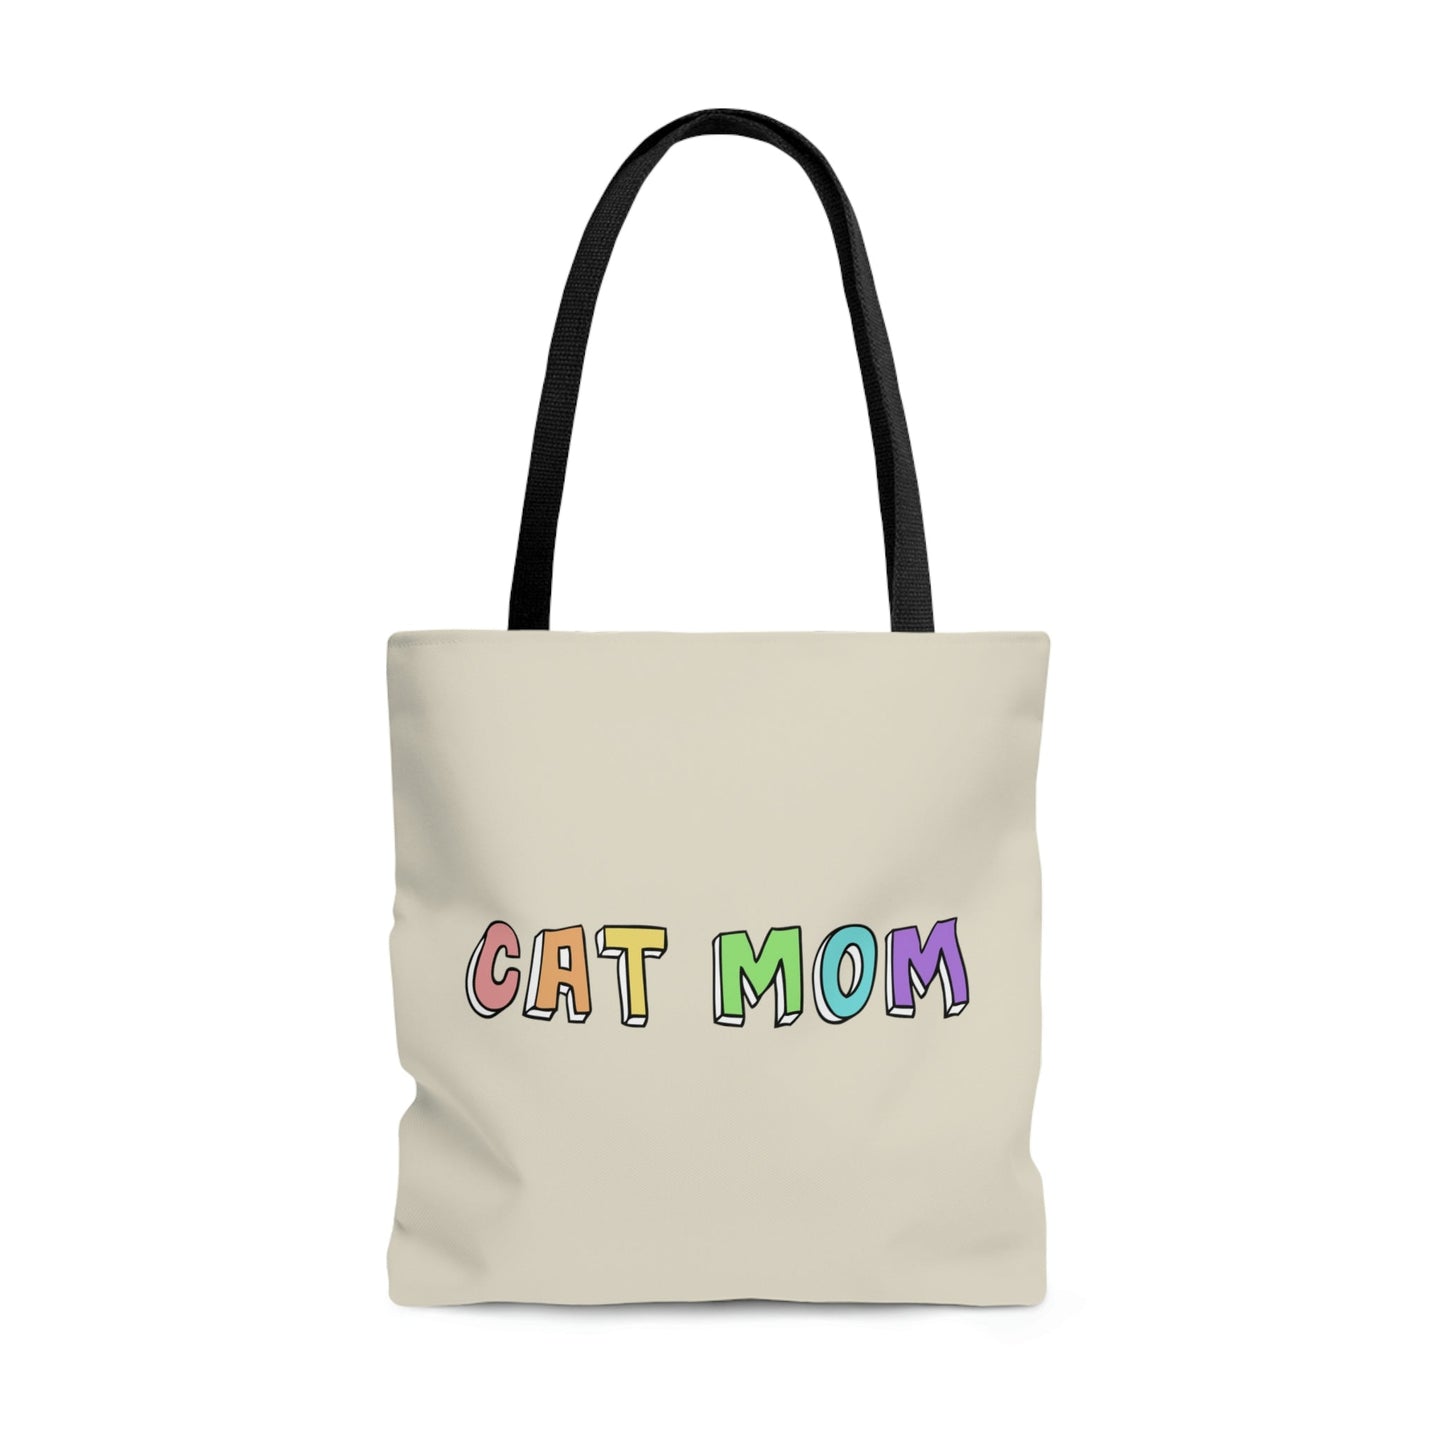 Cat Mom | Tote Bag - Detezi Designs-22112069088210378312